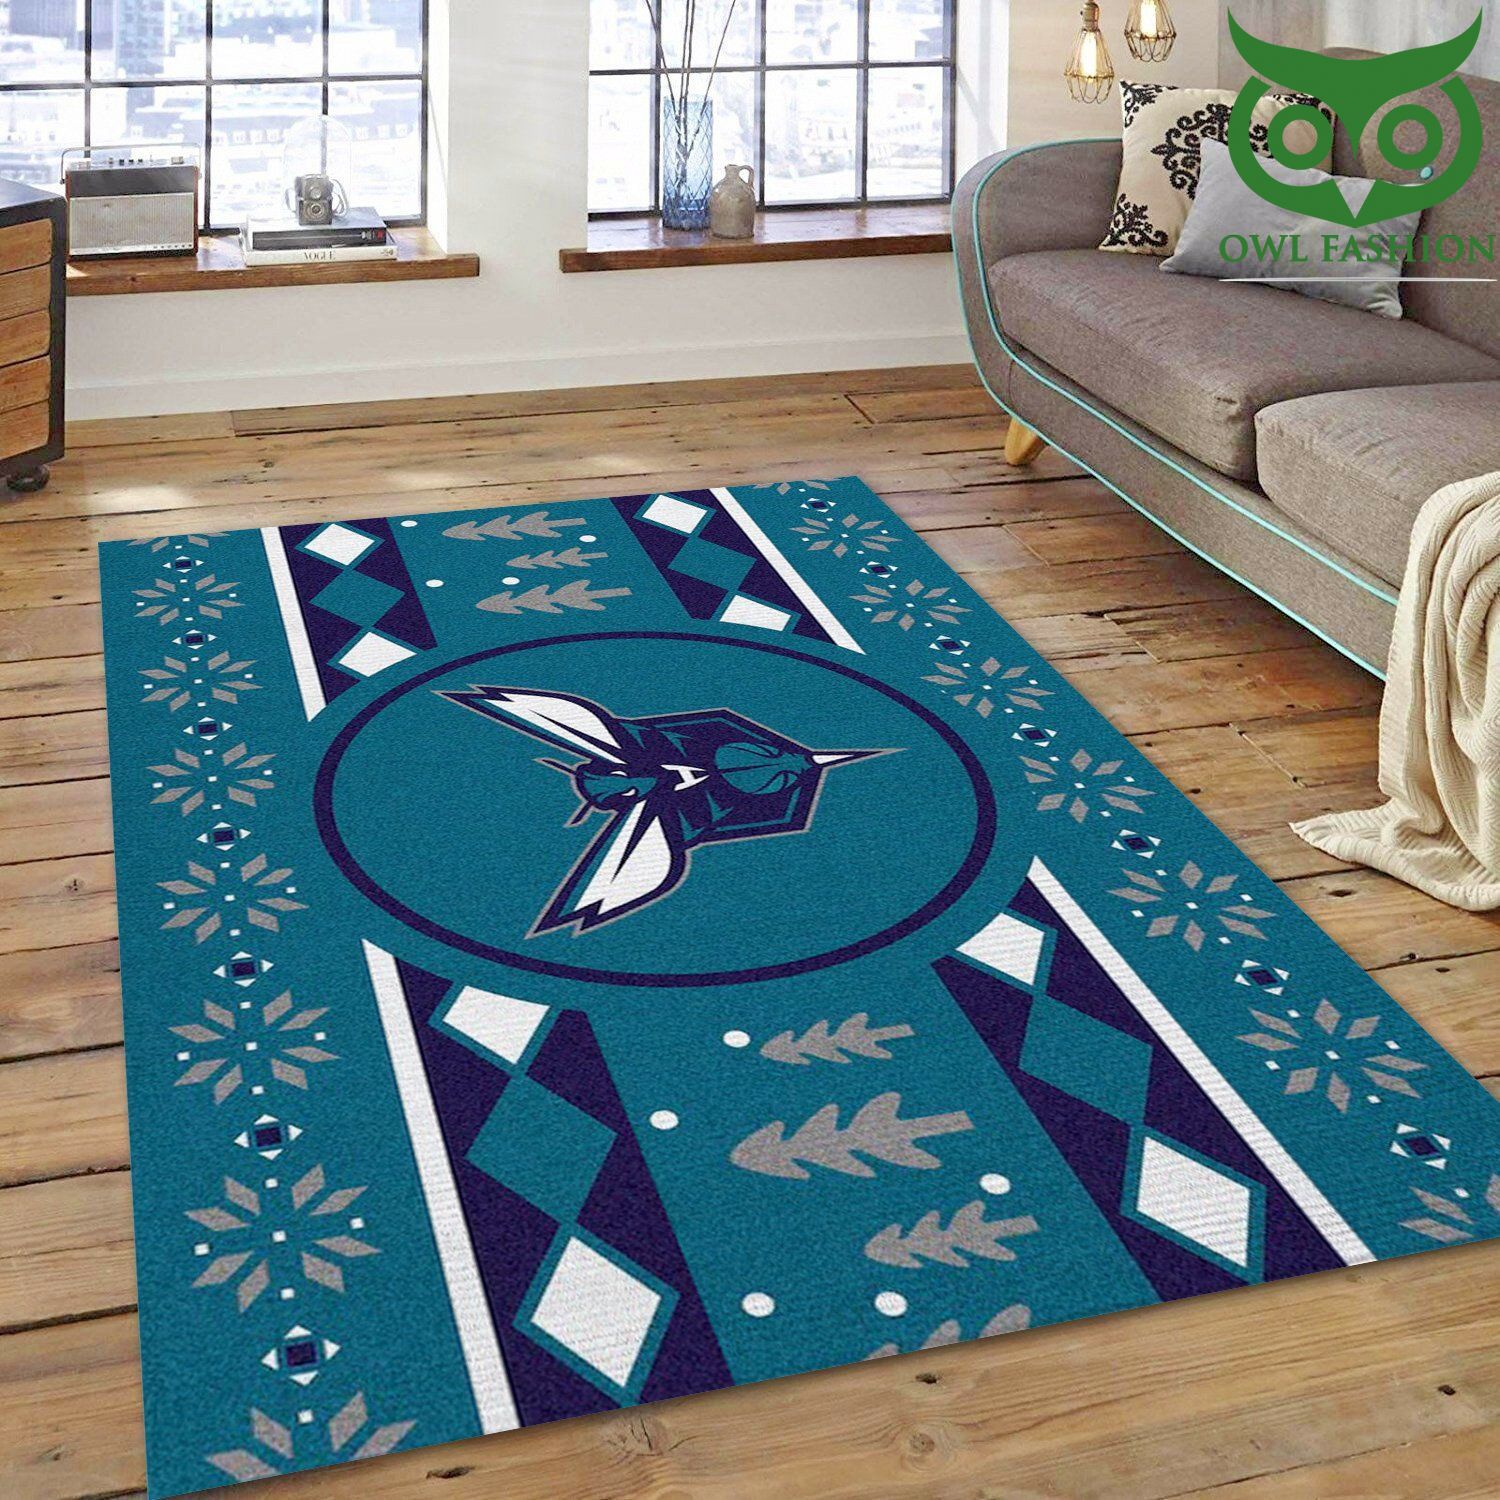 NBA Charlotte Hornets home and floor decor carpet rug 